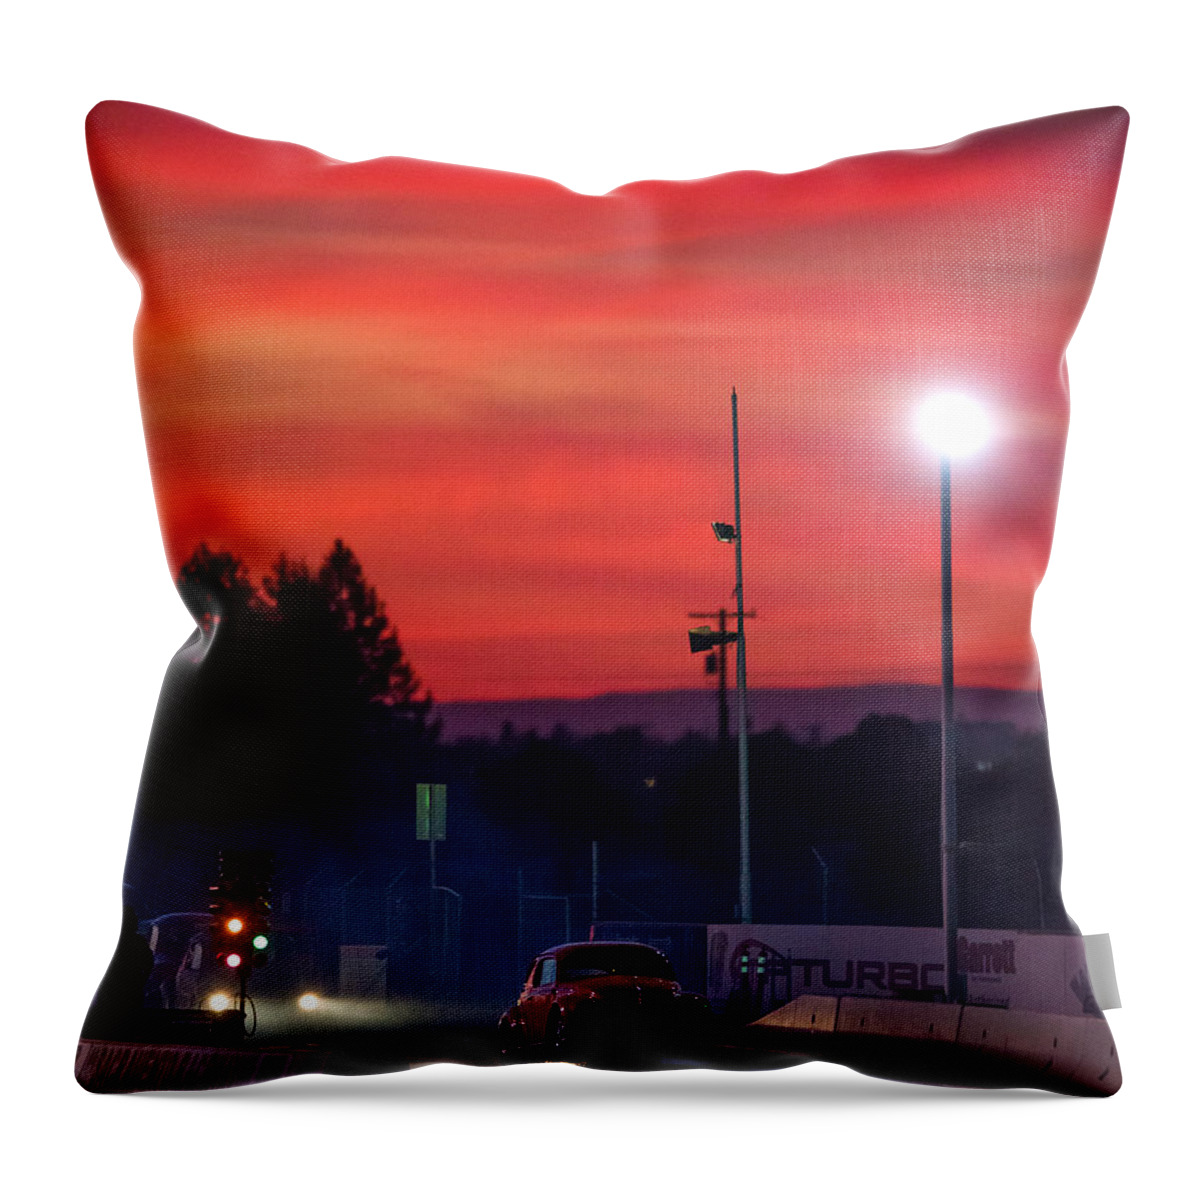 Car Show Throw Pillow featuring the photograph Sunset Drag Strip by Richard Kimbrough